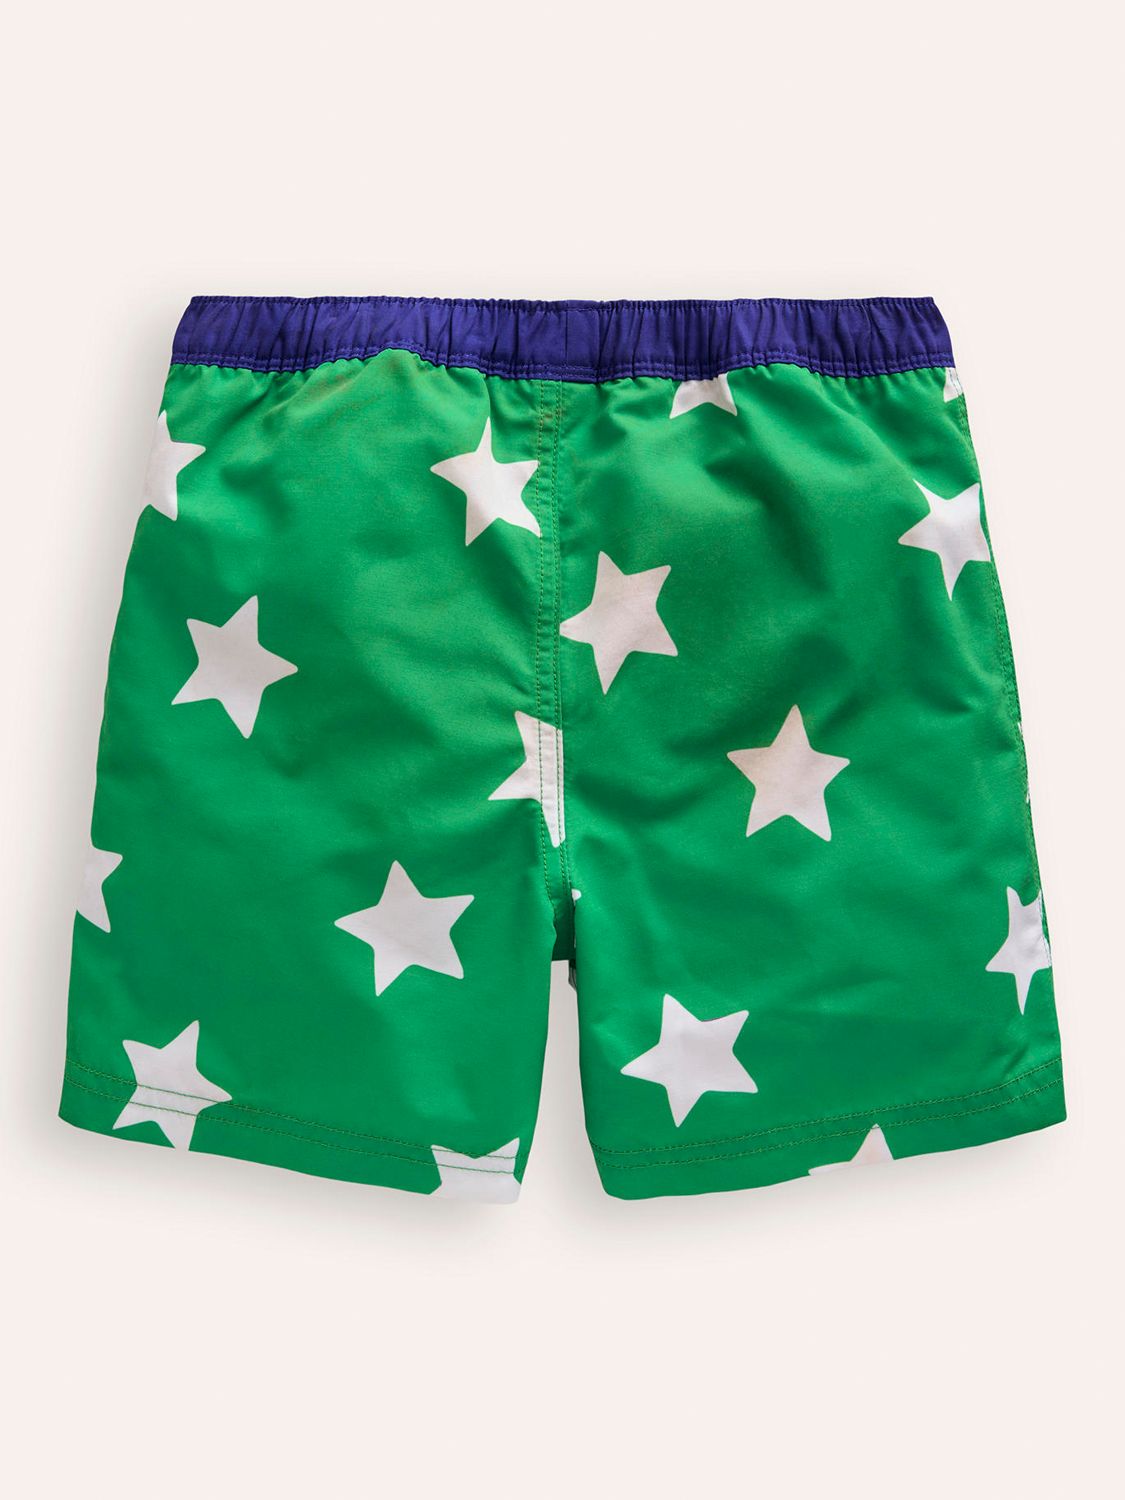 Mini Boden Kids' Star Swim Shorts, Sapling Green, 2-3 years